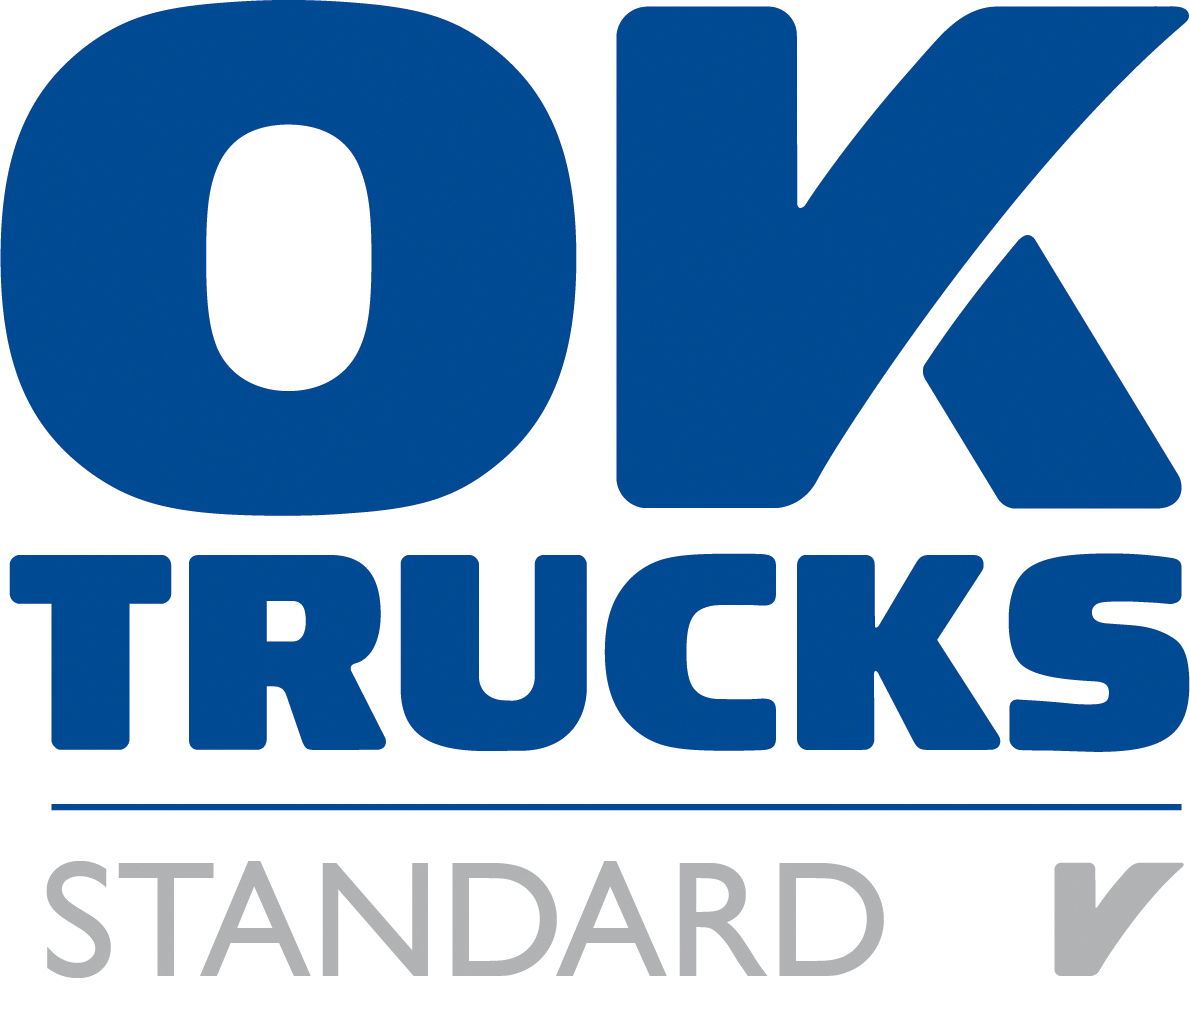 oktrucks logo standard